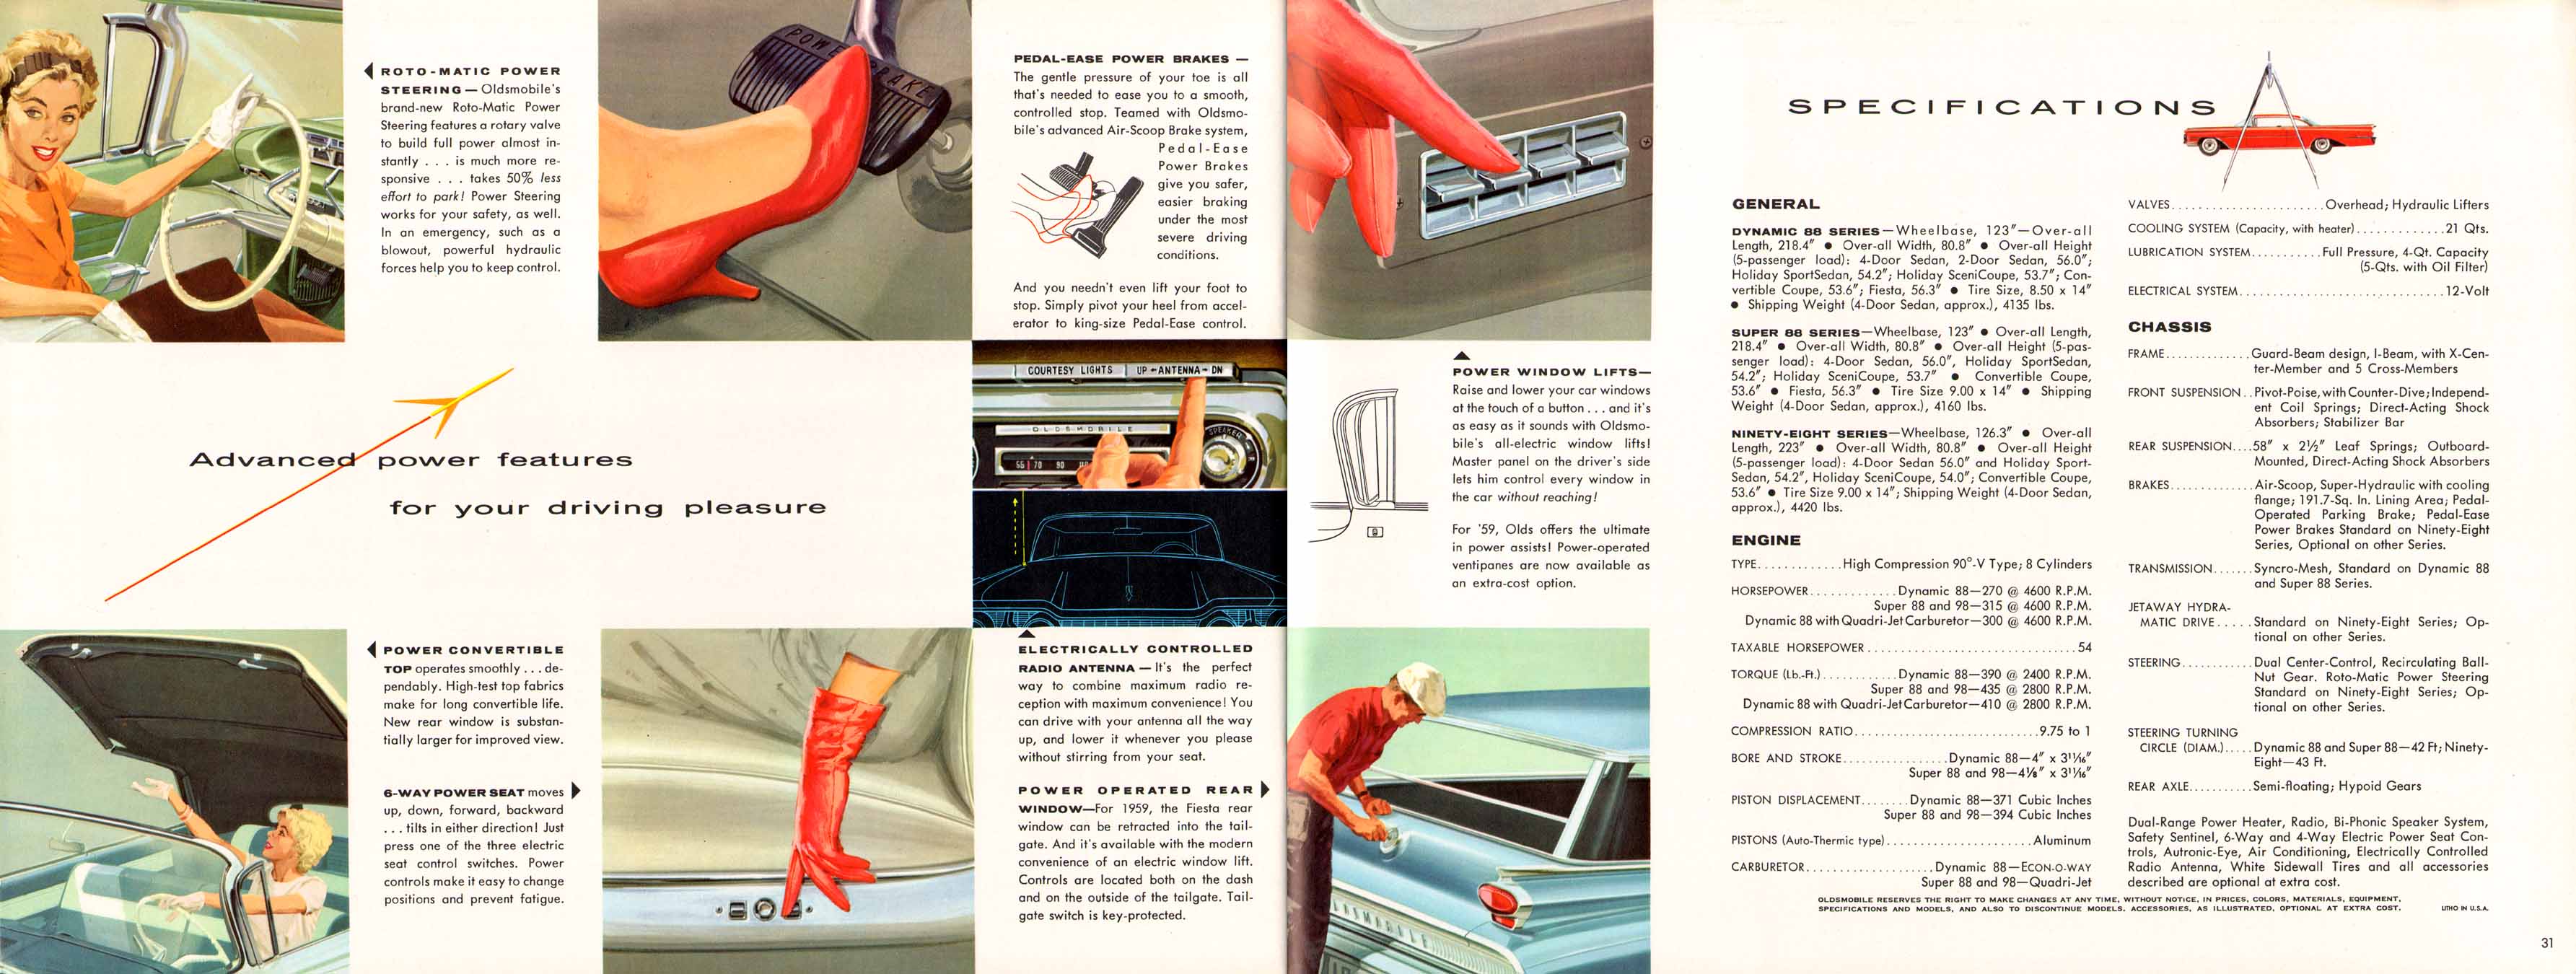 1959 Oldsmobile Motor Cars Brochure Page 3